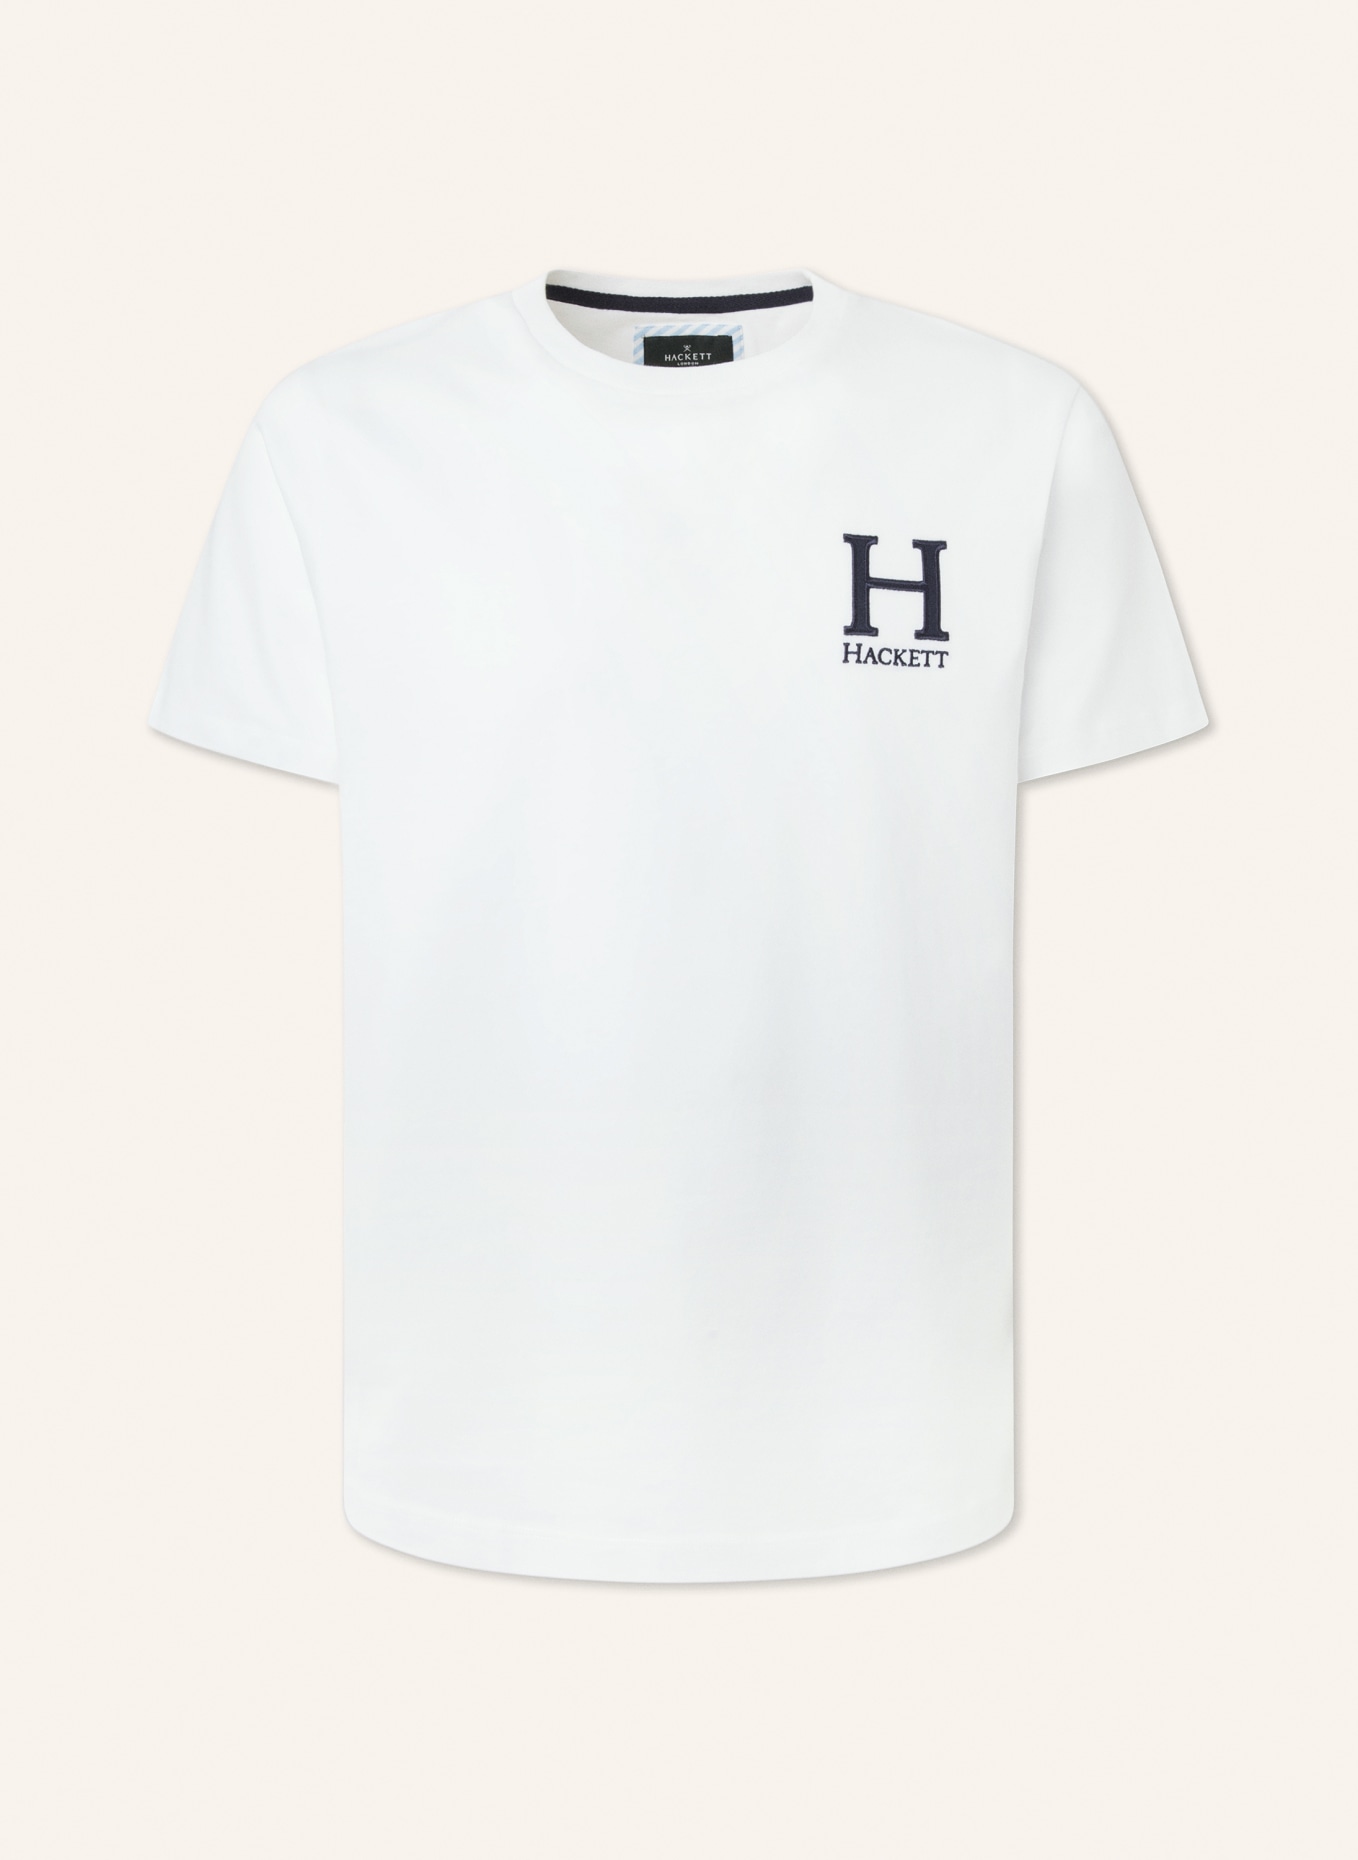 HACKETT LONDON T-Shirt HERITAGE H TEE, Farbe: WEISS (Bild 1)